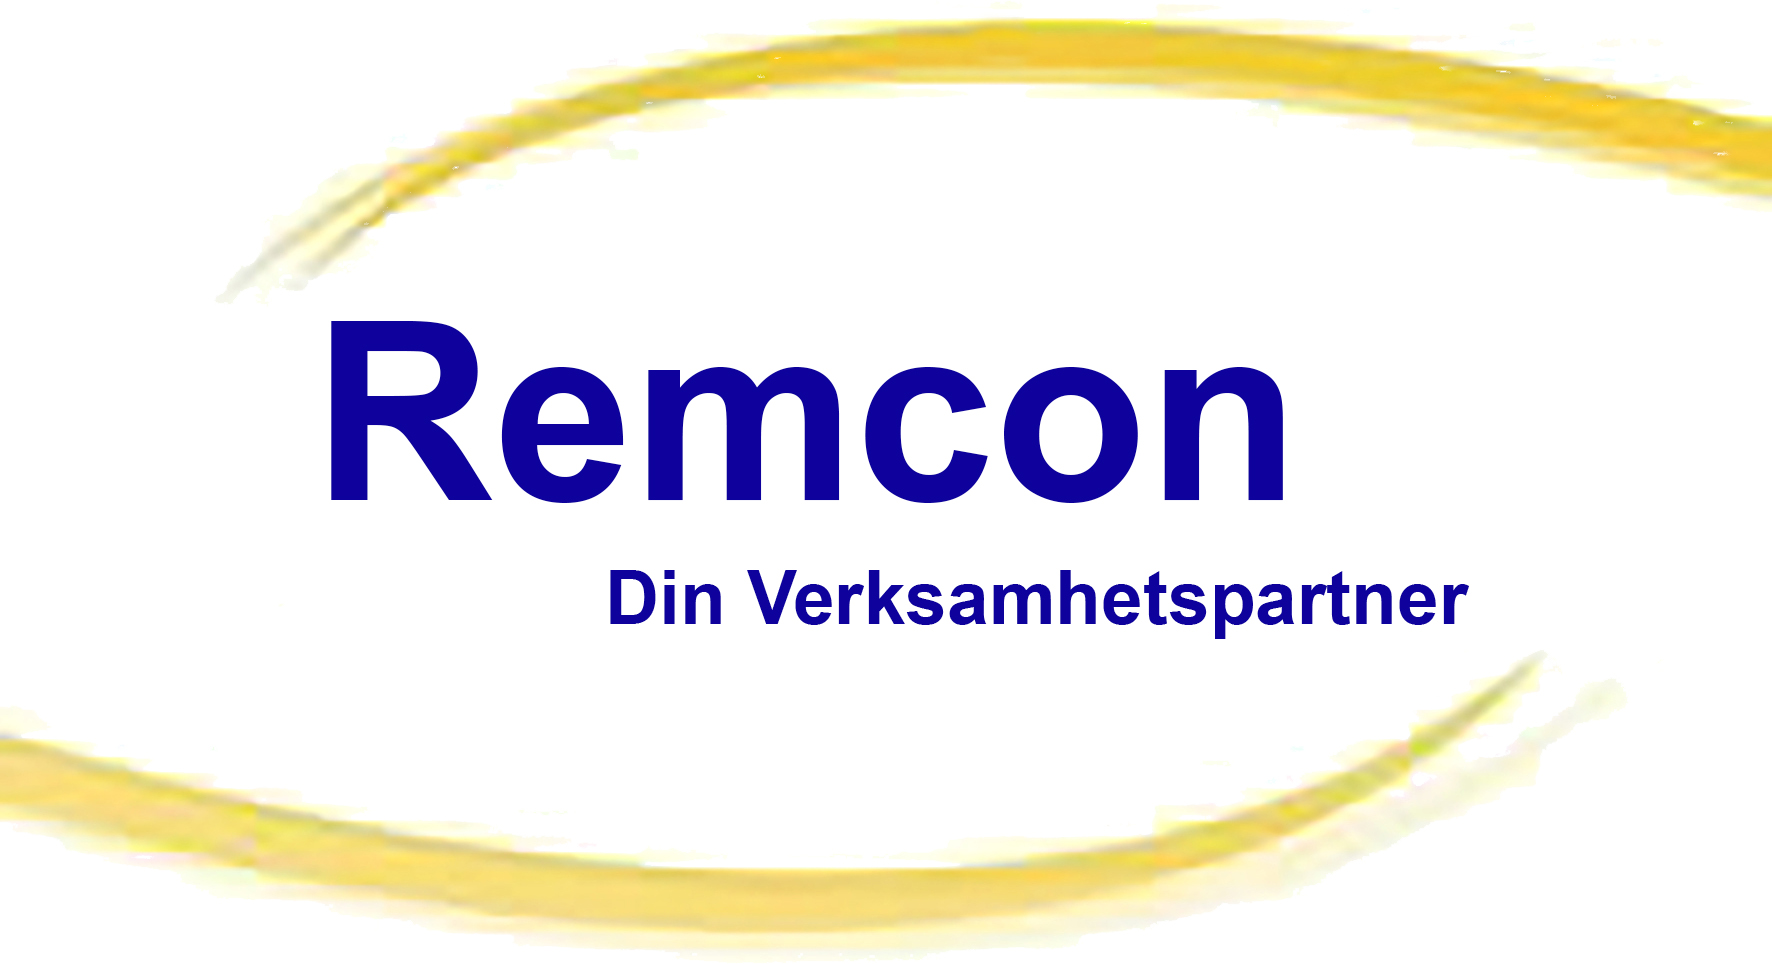 Remcon - Din Verksamhetspartner